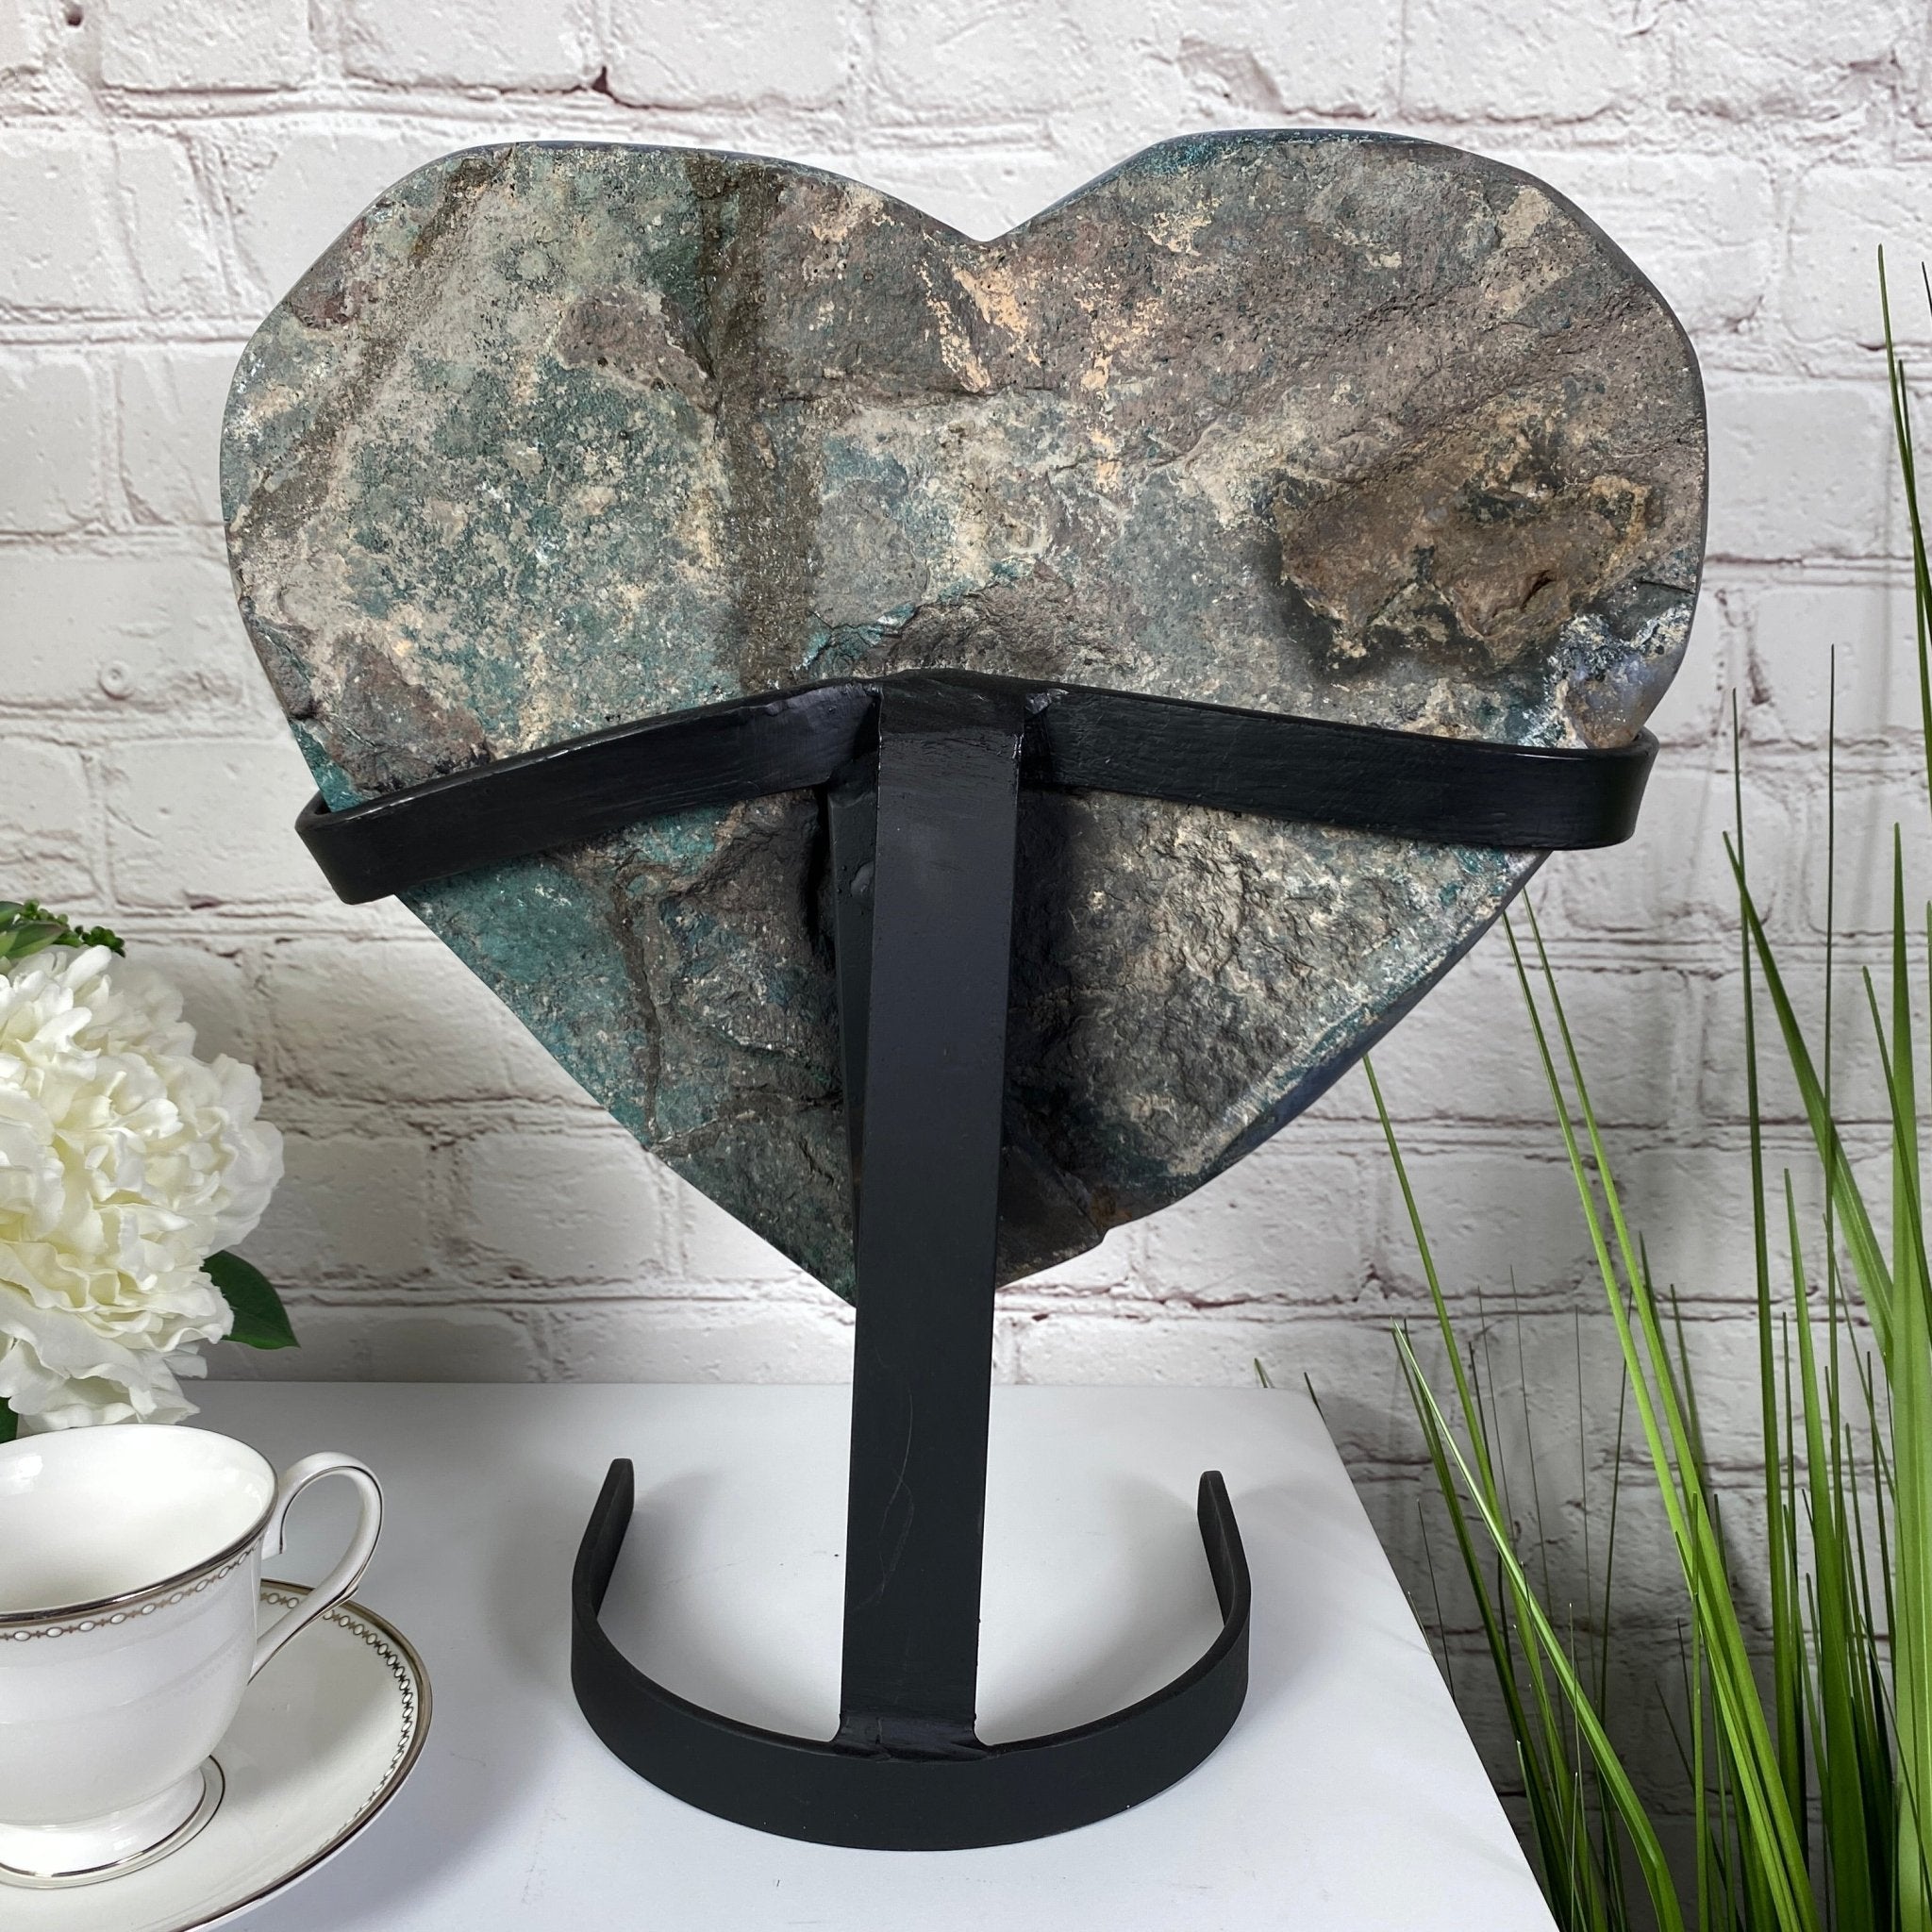 Extra Quality Amethyst Heart Geode, metal stand, 15.5" Tall & 27.2 lbs #5463-0041 by Brazil Gems - Brazil GemsBrazil GemsExtra Quality Amethyst Heart Geode, metal stand, 15.5" Tall & 27.2 lbs #5463-0041 by Brazil GemsHearts5463-0041